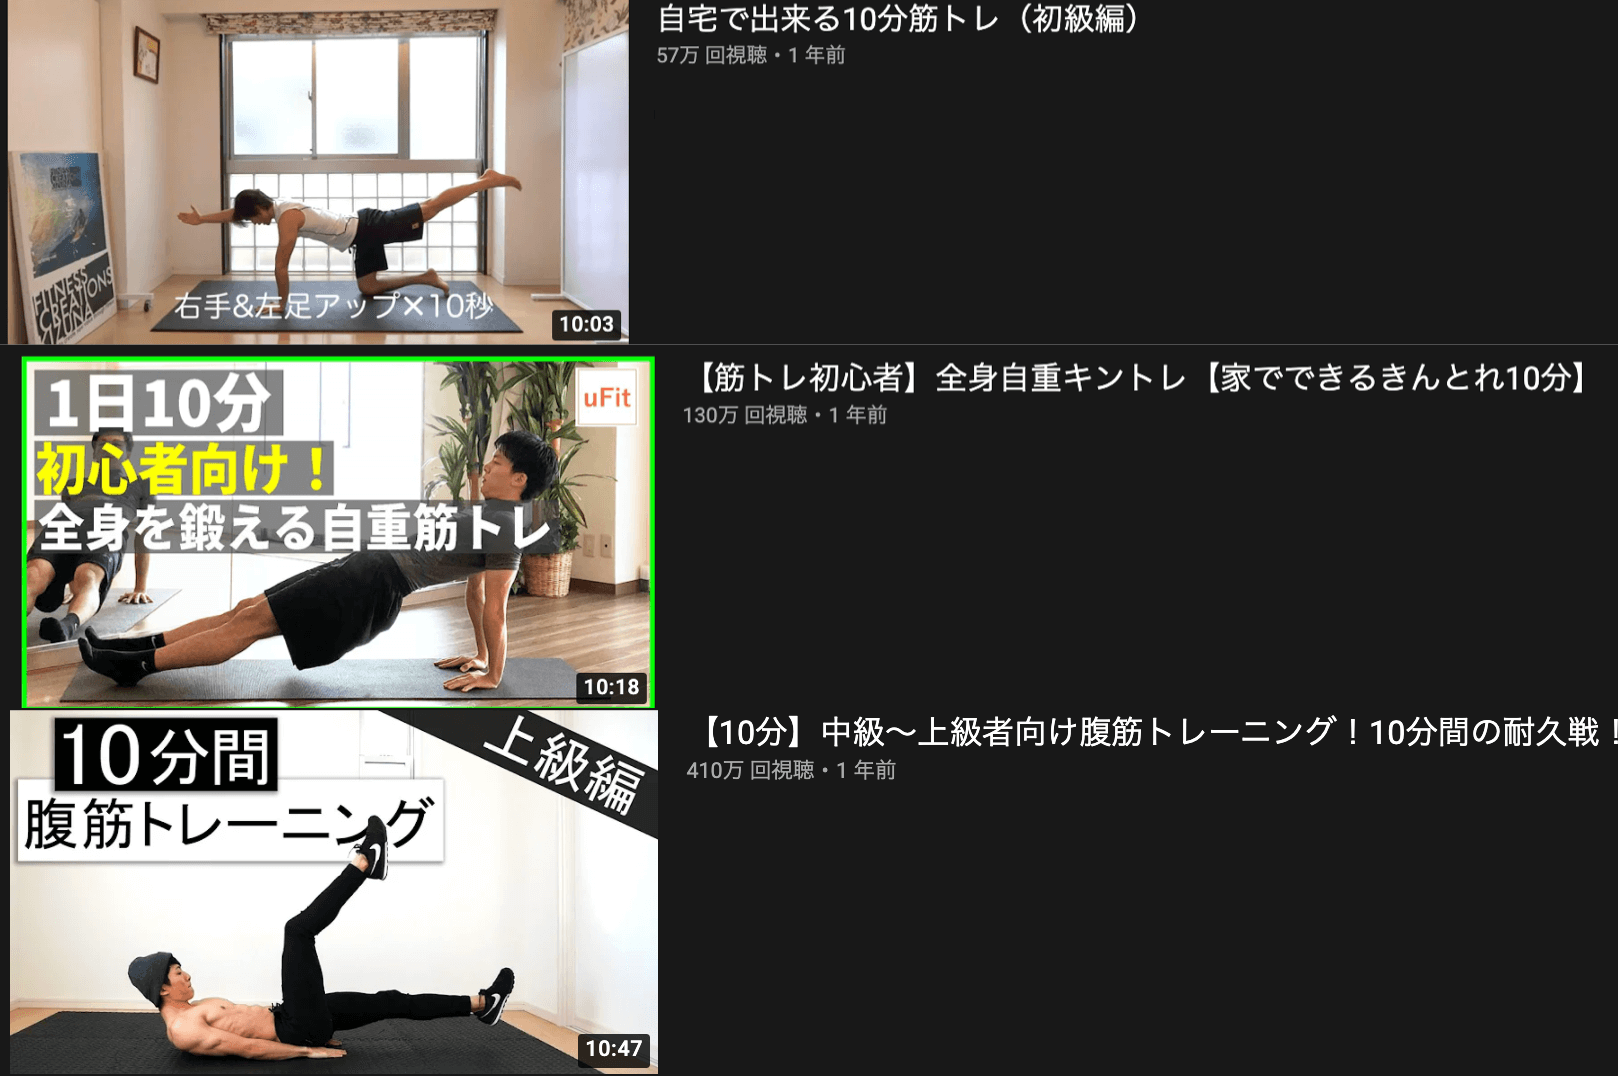 YouTube-weight training-video